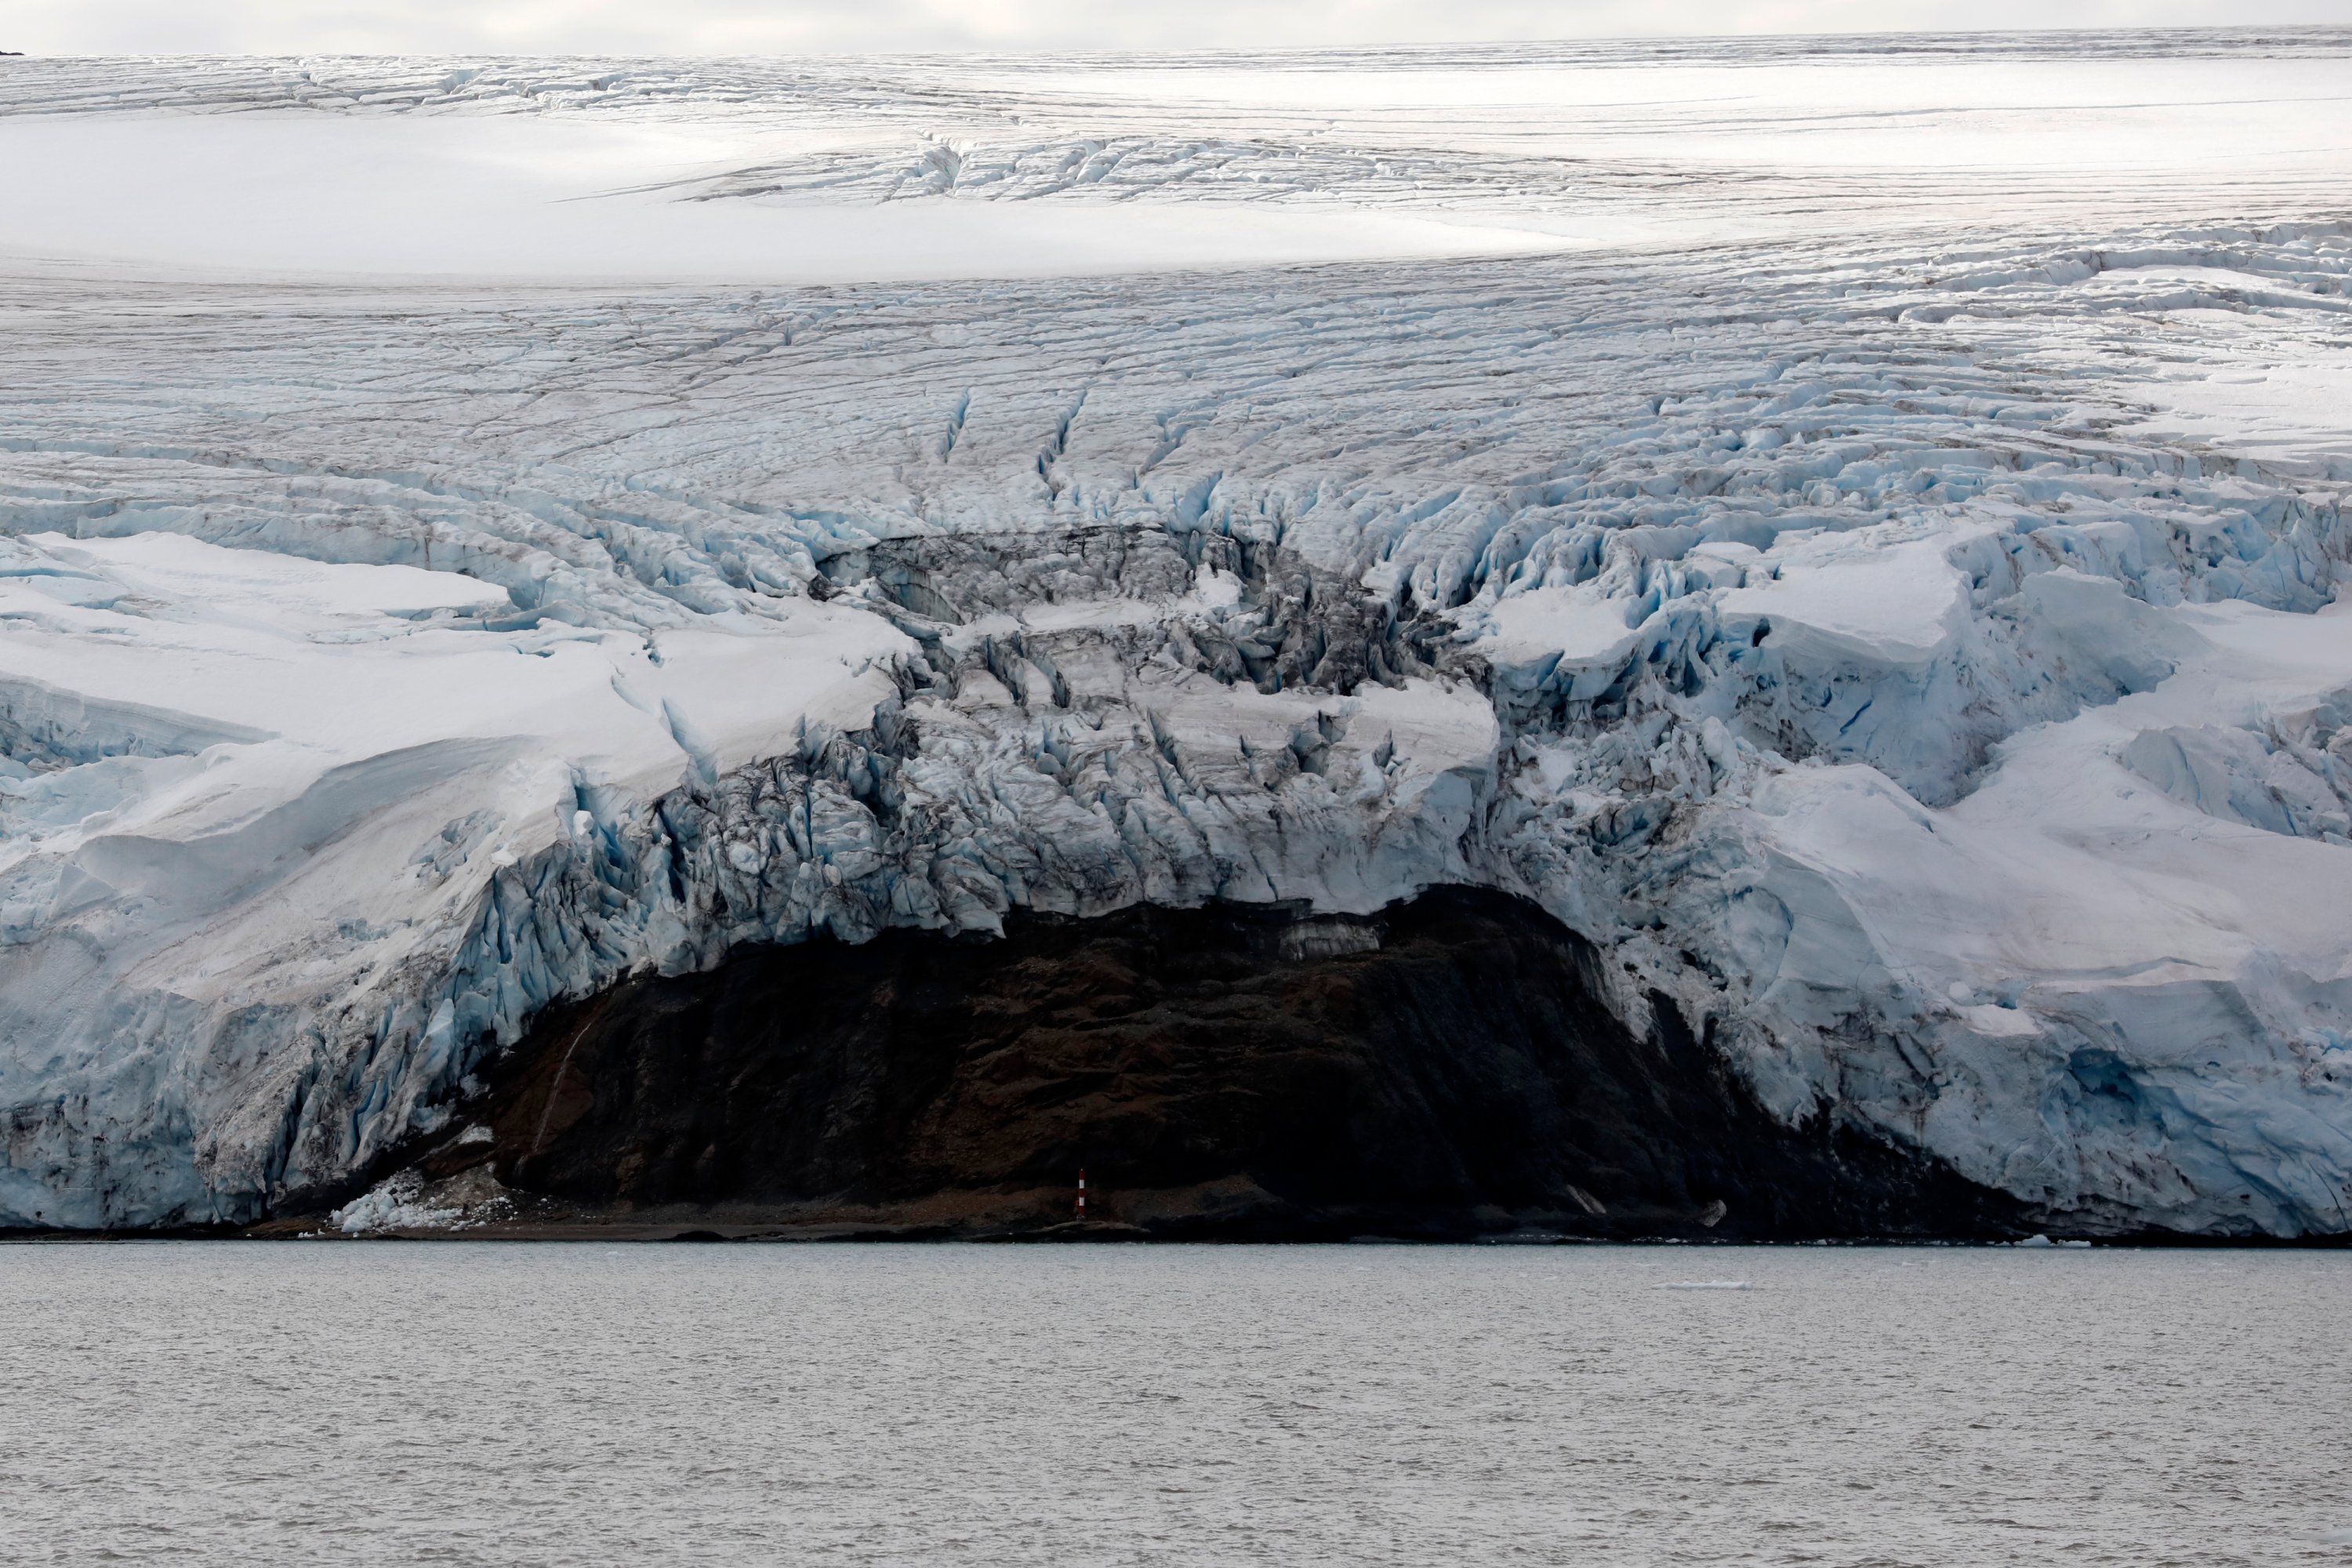 Antarctica is full of icebergs and glaciers. (Photos by Hayrettin Bektaş)